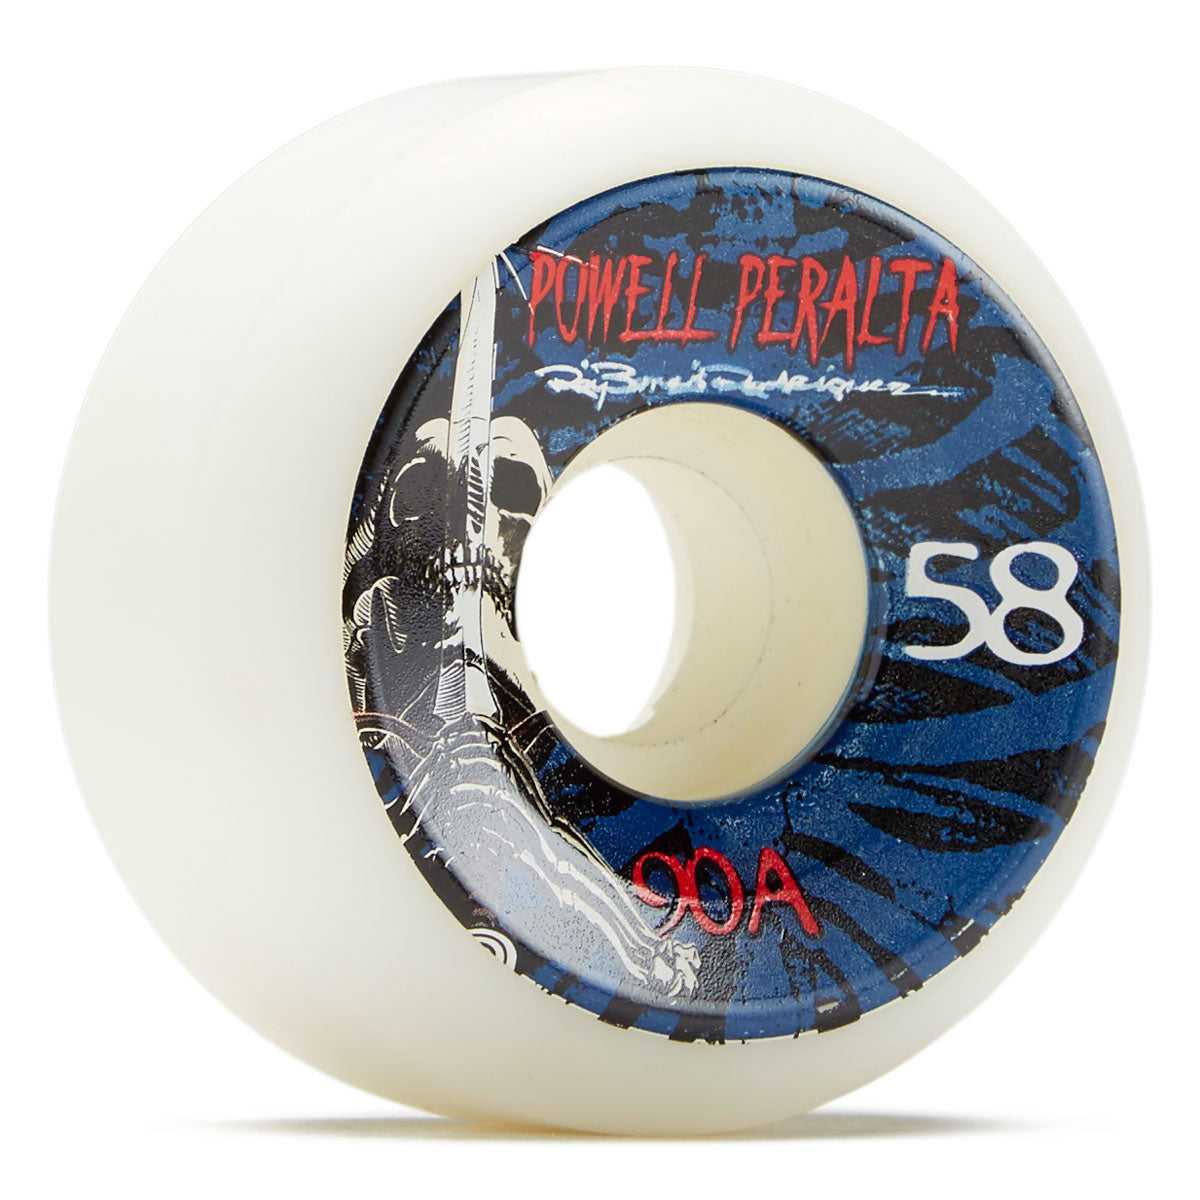 Powell-Peralta Skull and Sword 3 90A Skateboard Wheels - White - 58mm